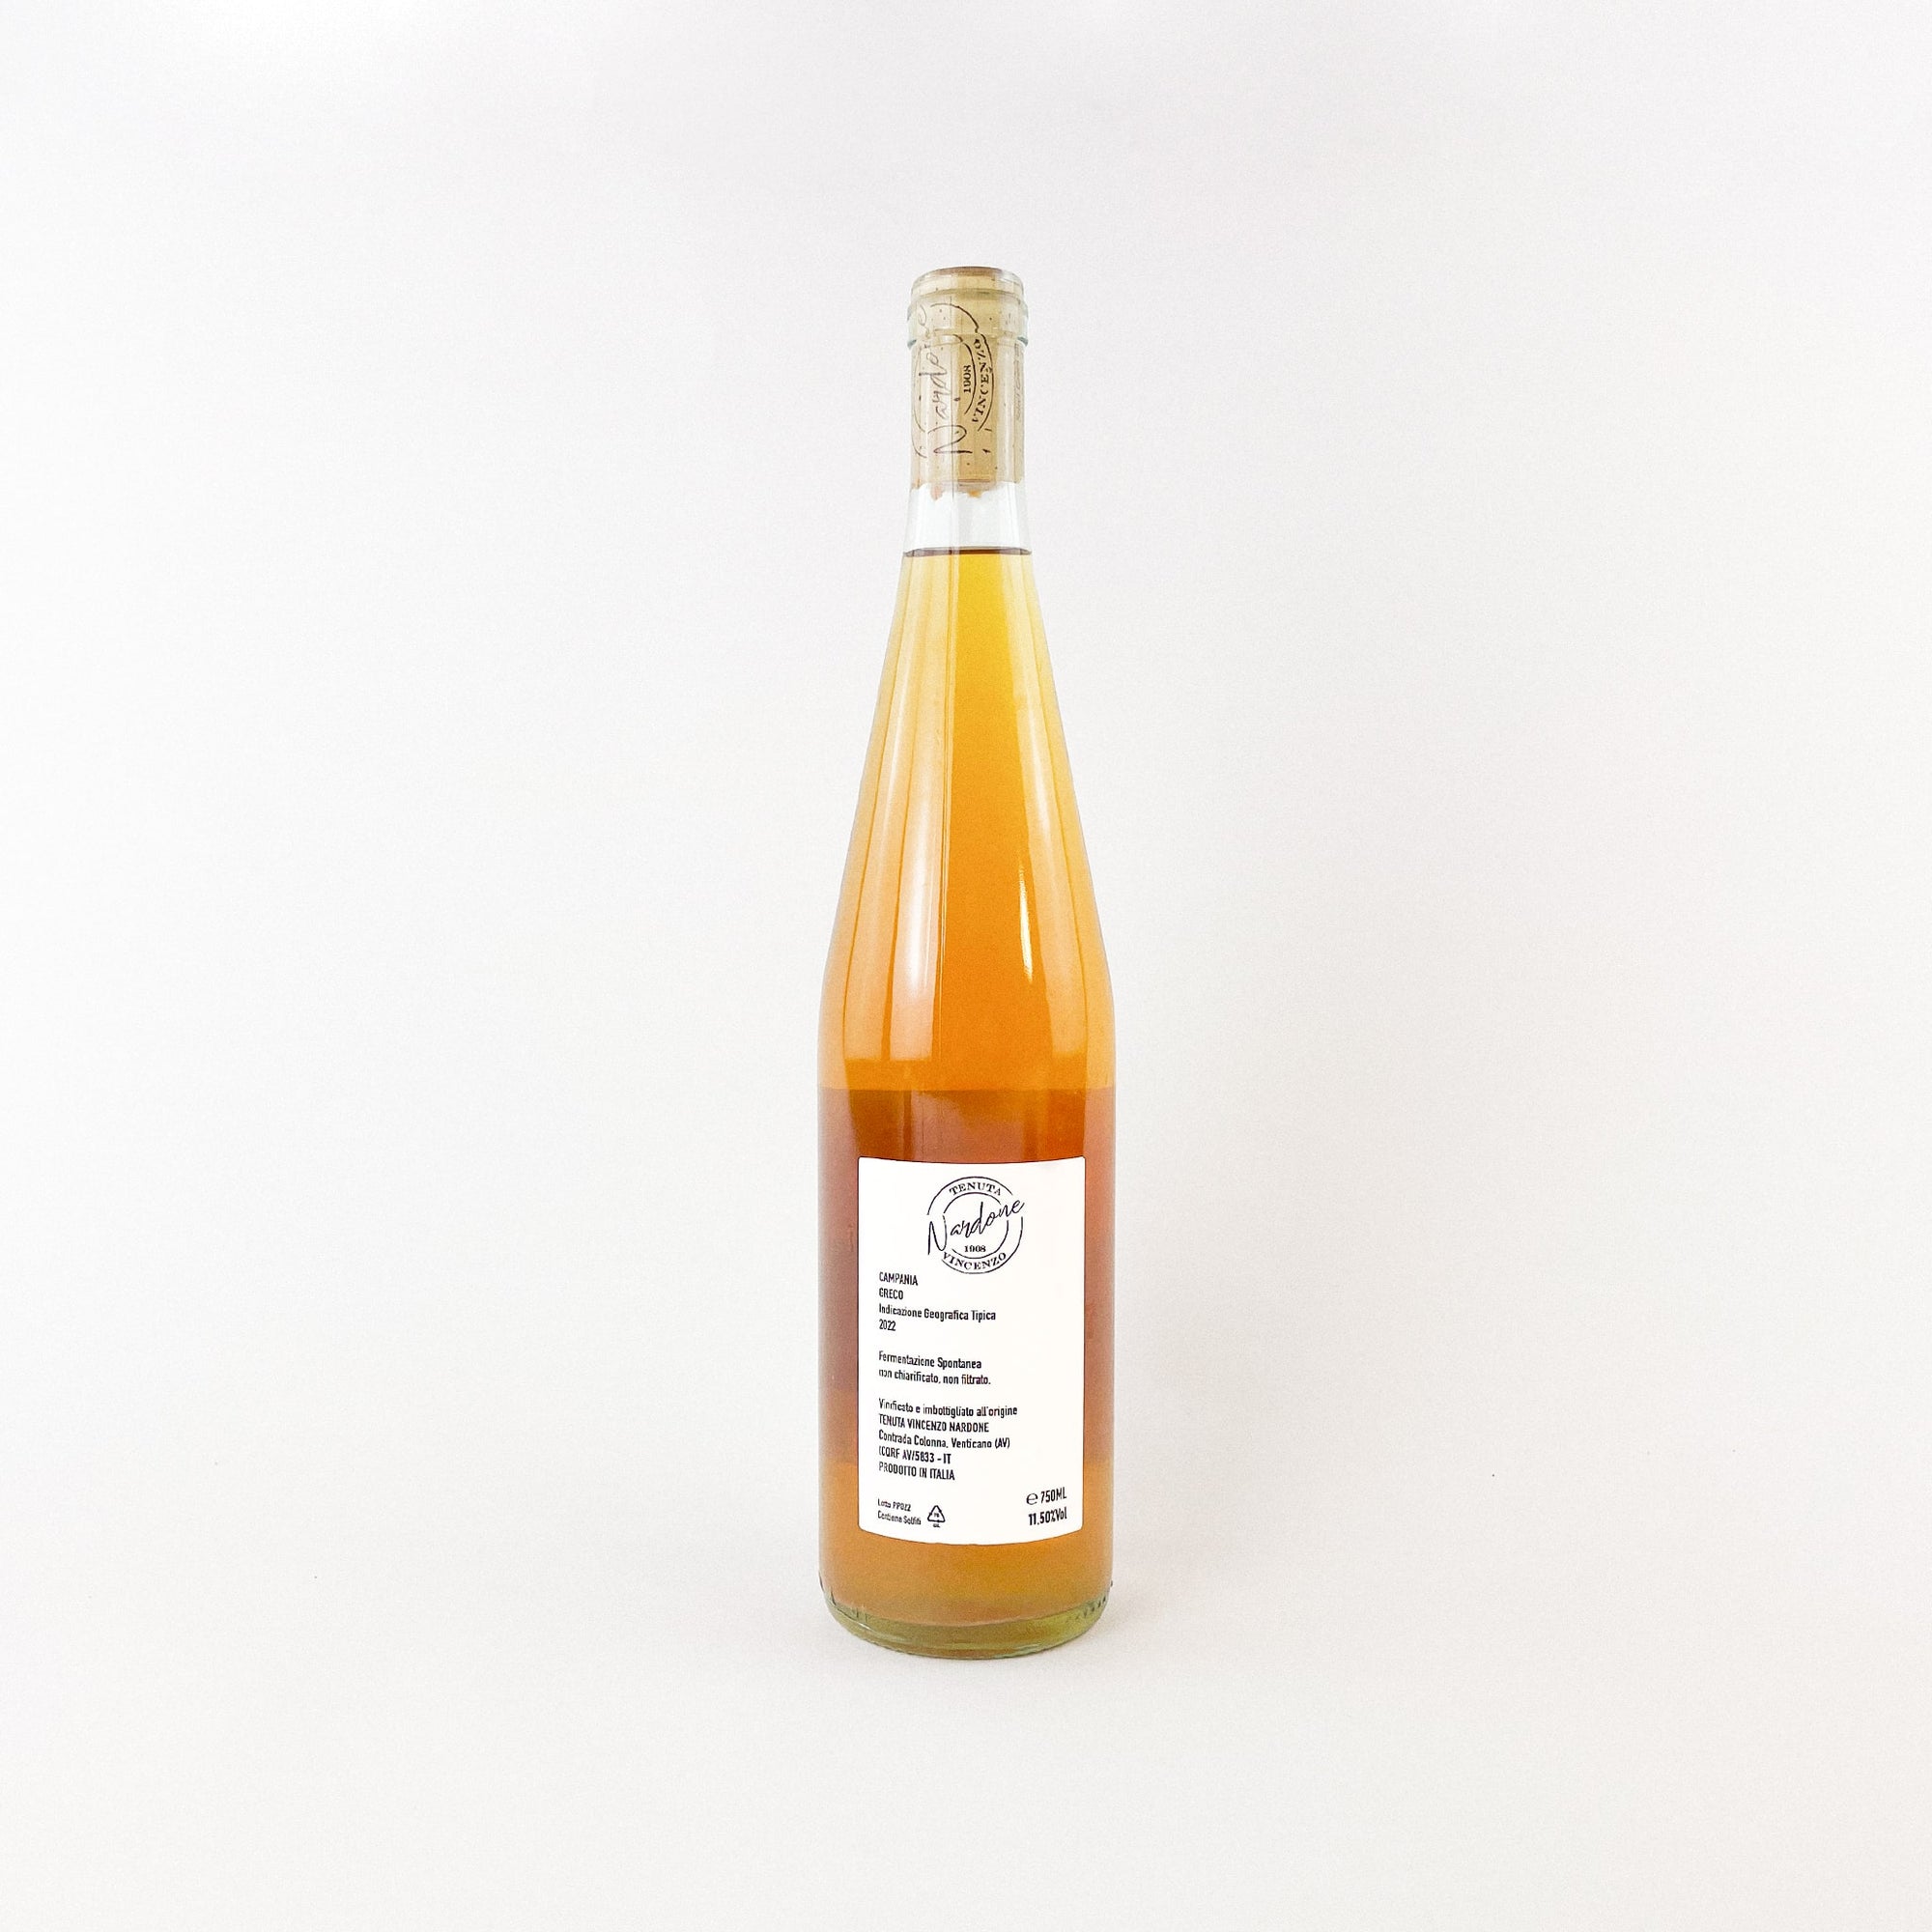 A bottle of orange natural wine from Italy - Pupo Zero Greco by Tenuta Nardone Back View